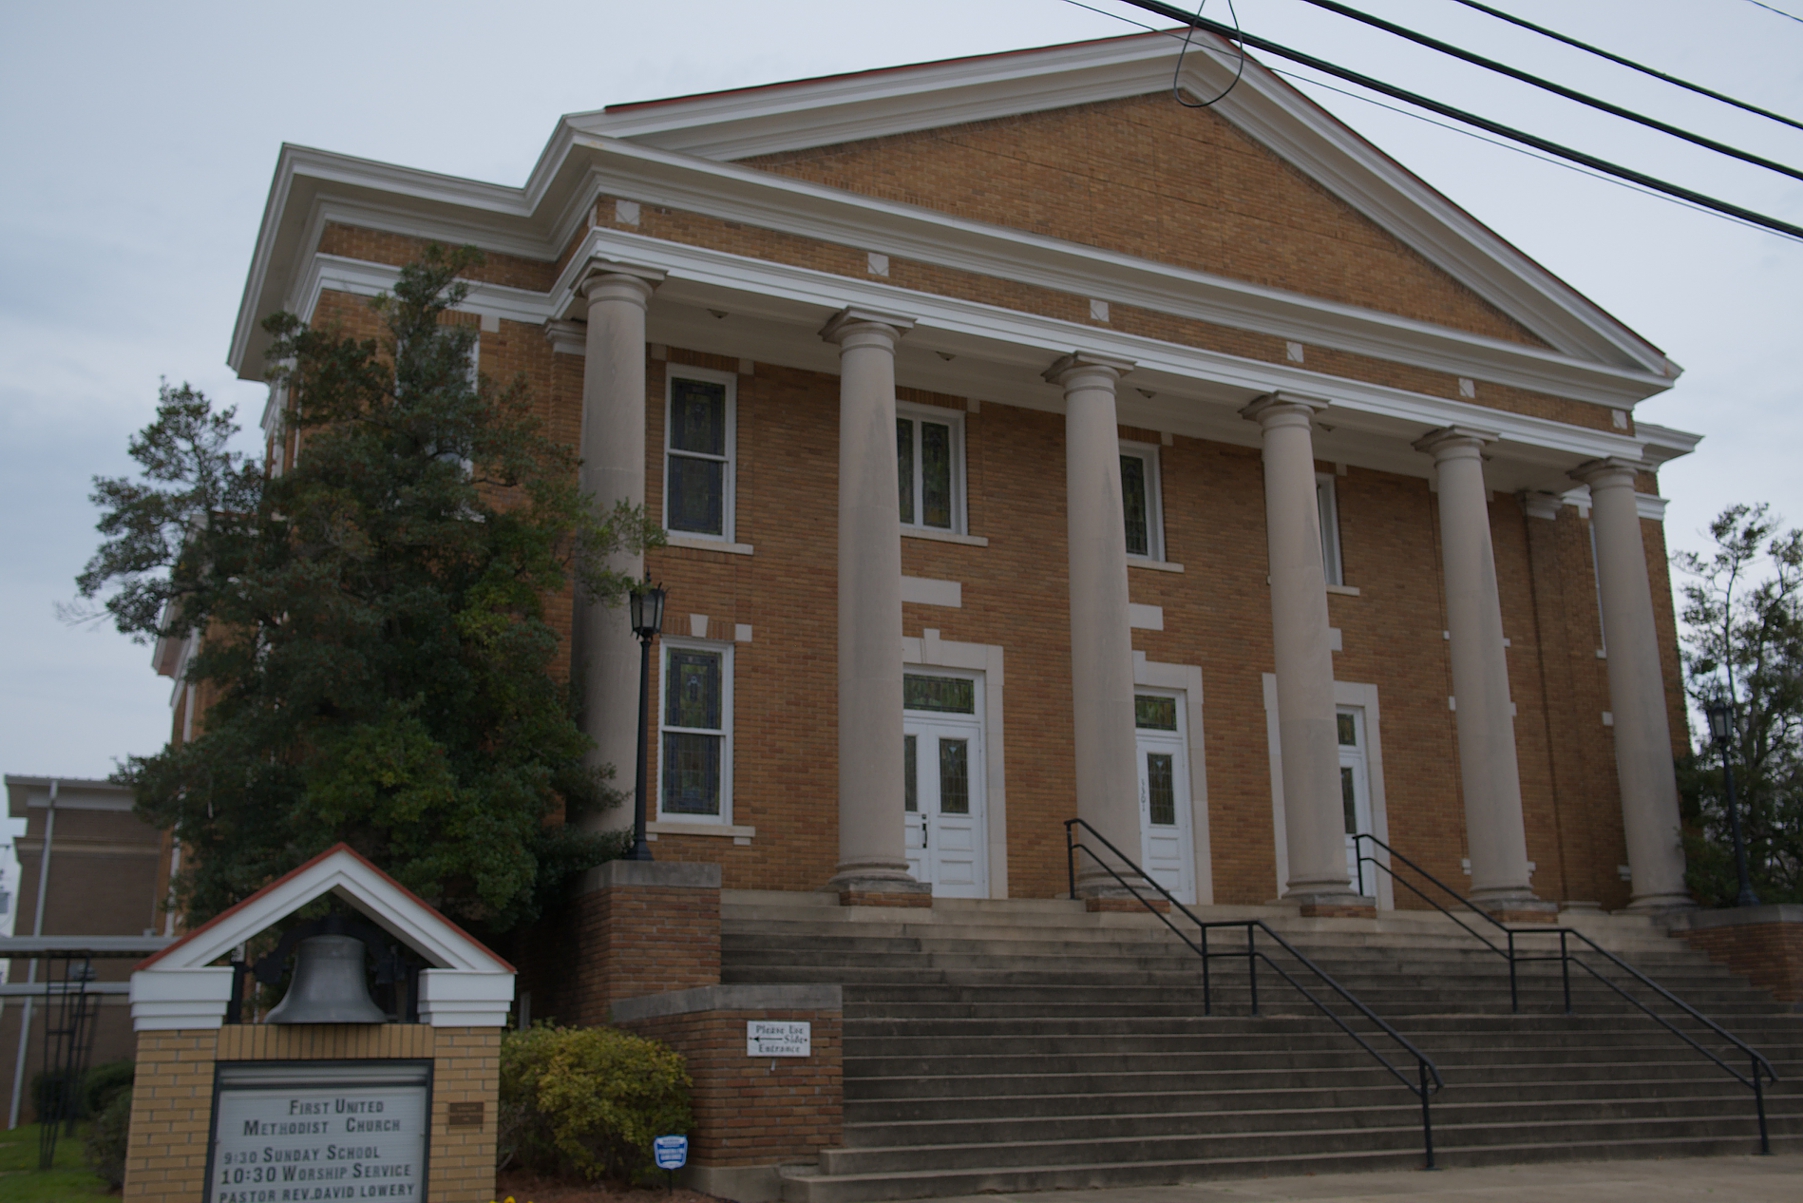  First United Methodist Church in Canton 